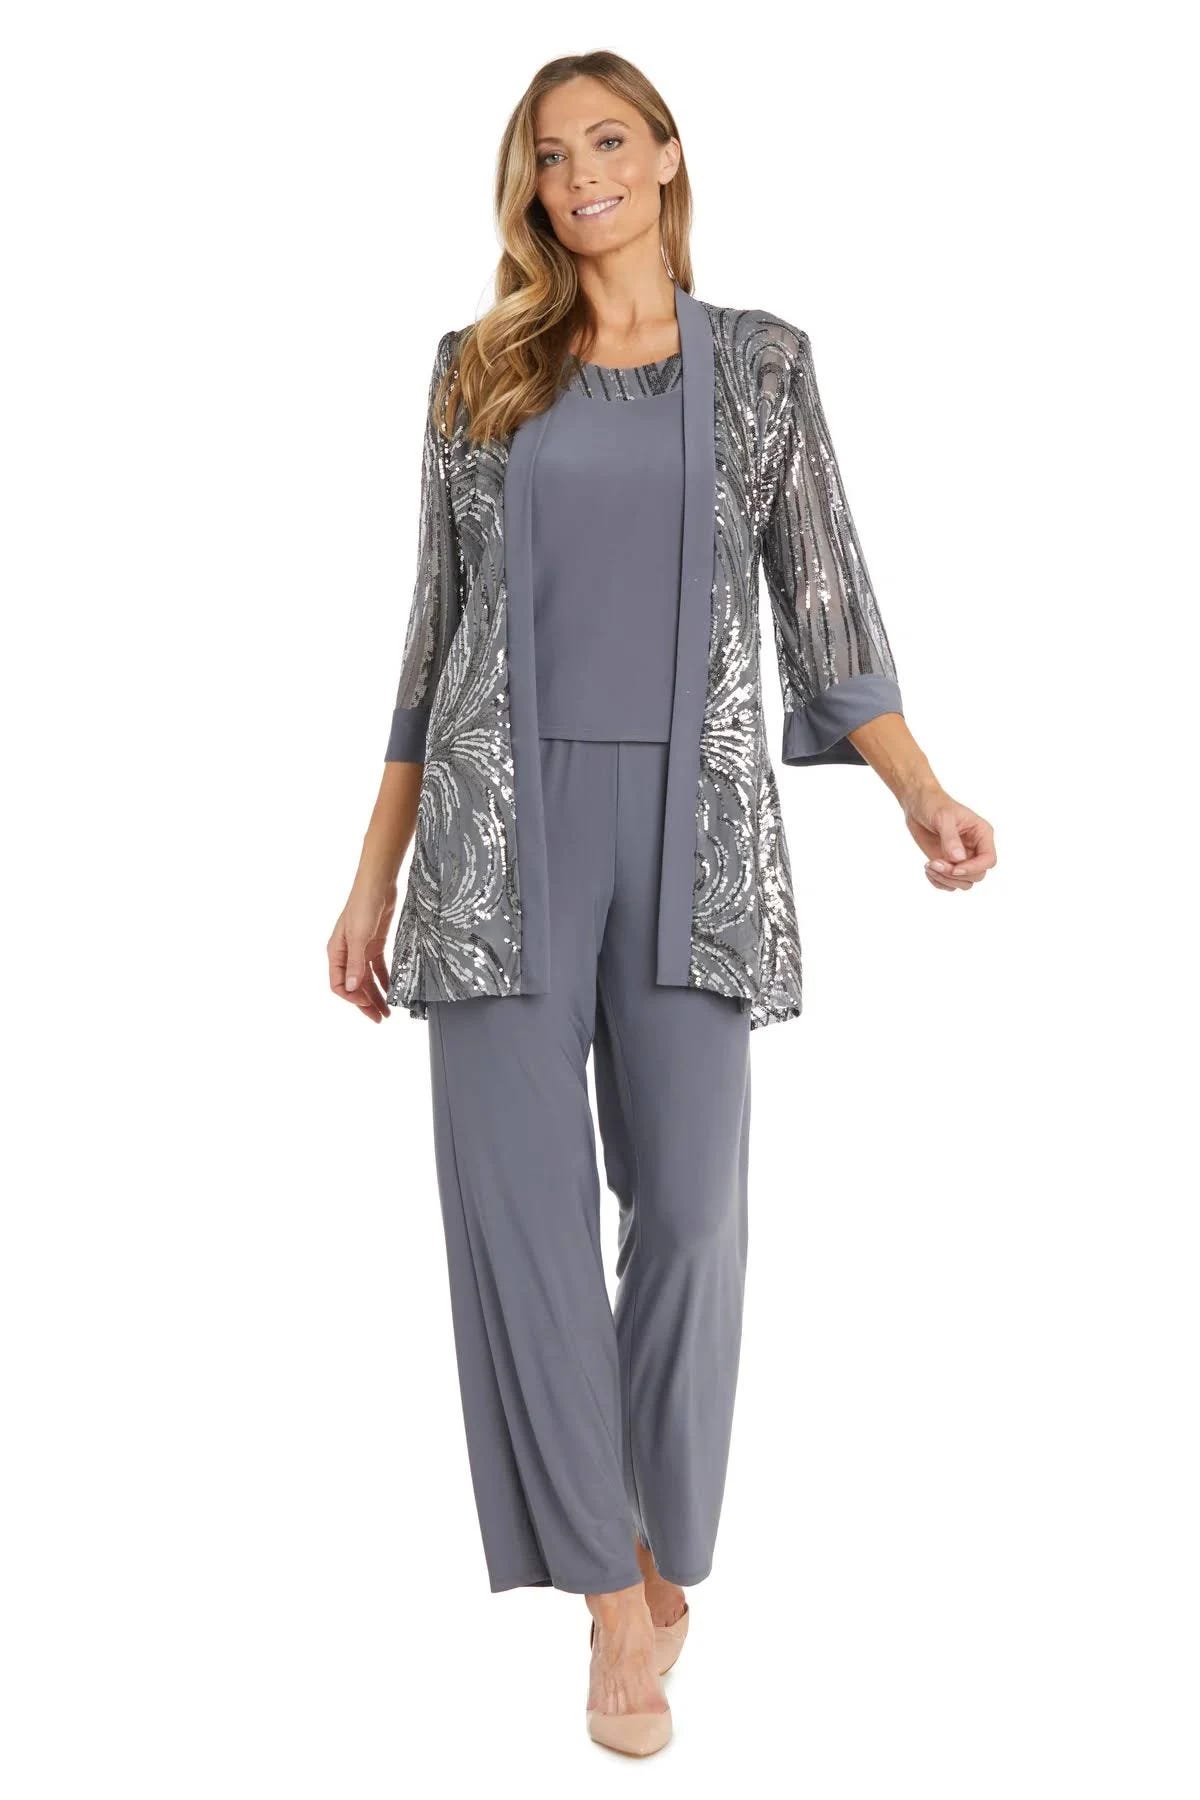 Stylish Gunmetal Sequin Suit for Women - Navy Periwinkle Sleeveless and 3/4 Sleeve Option | Image